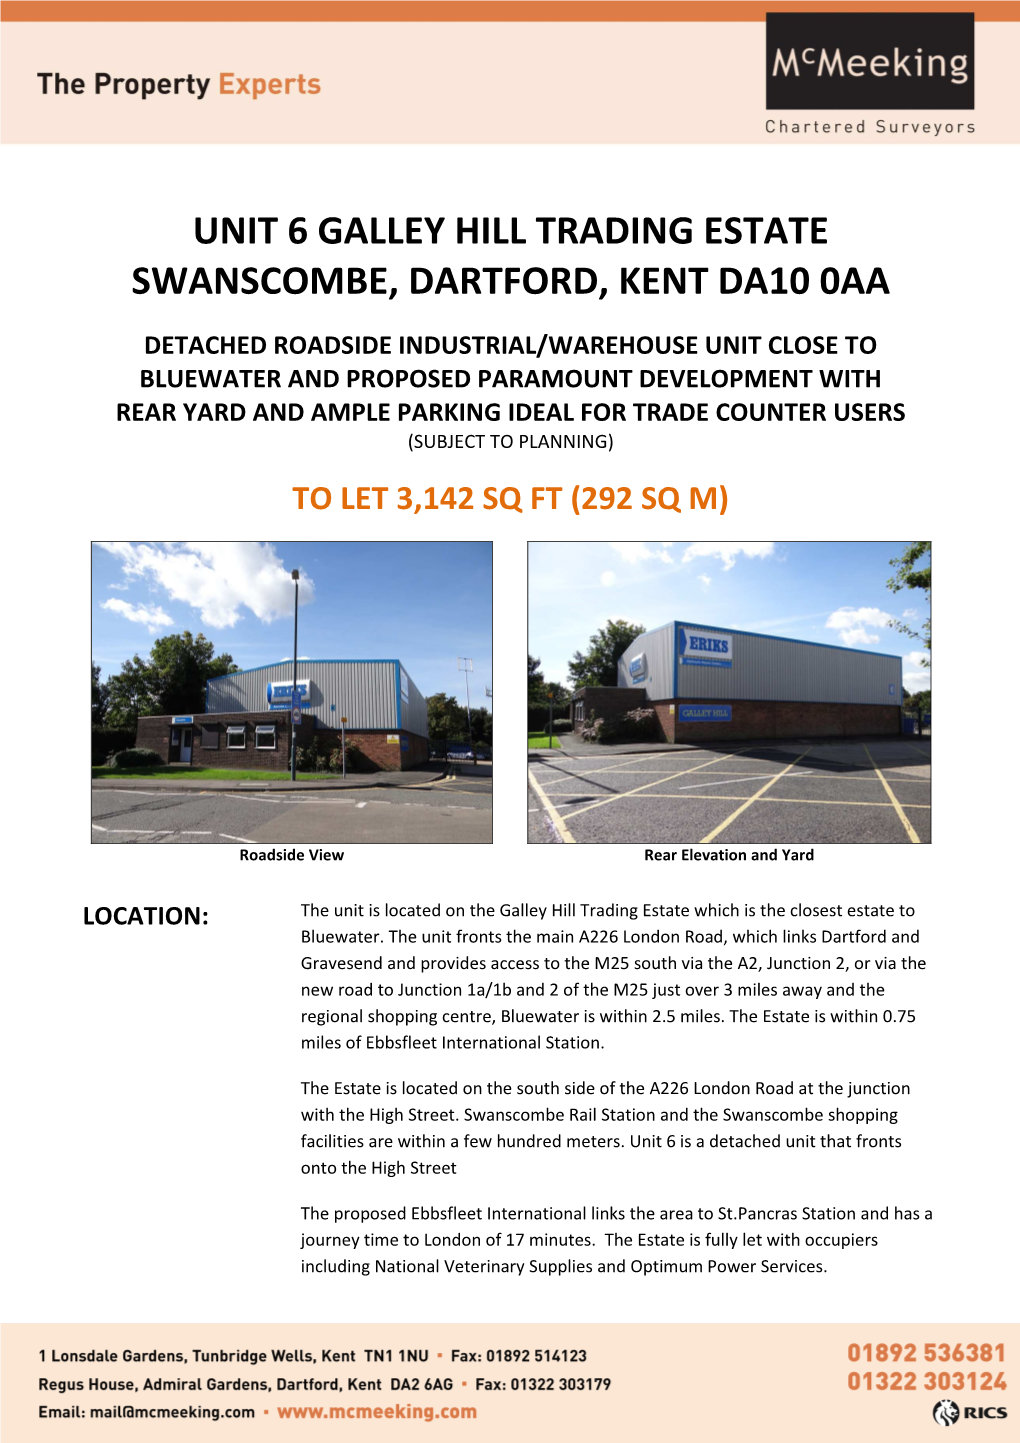 Unit 6 Galley Hill Trading Estate Swanscombe, Dartford, Kent Da10 0Aa